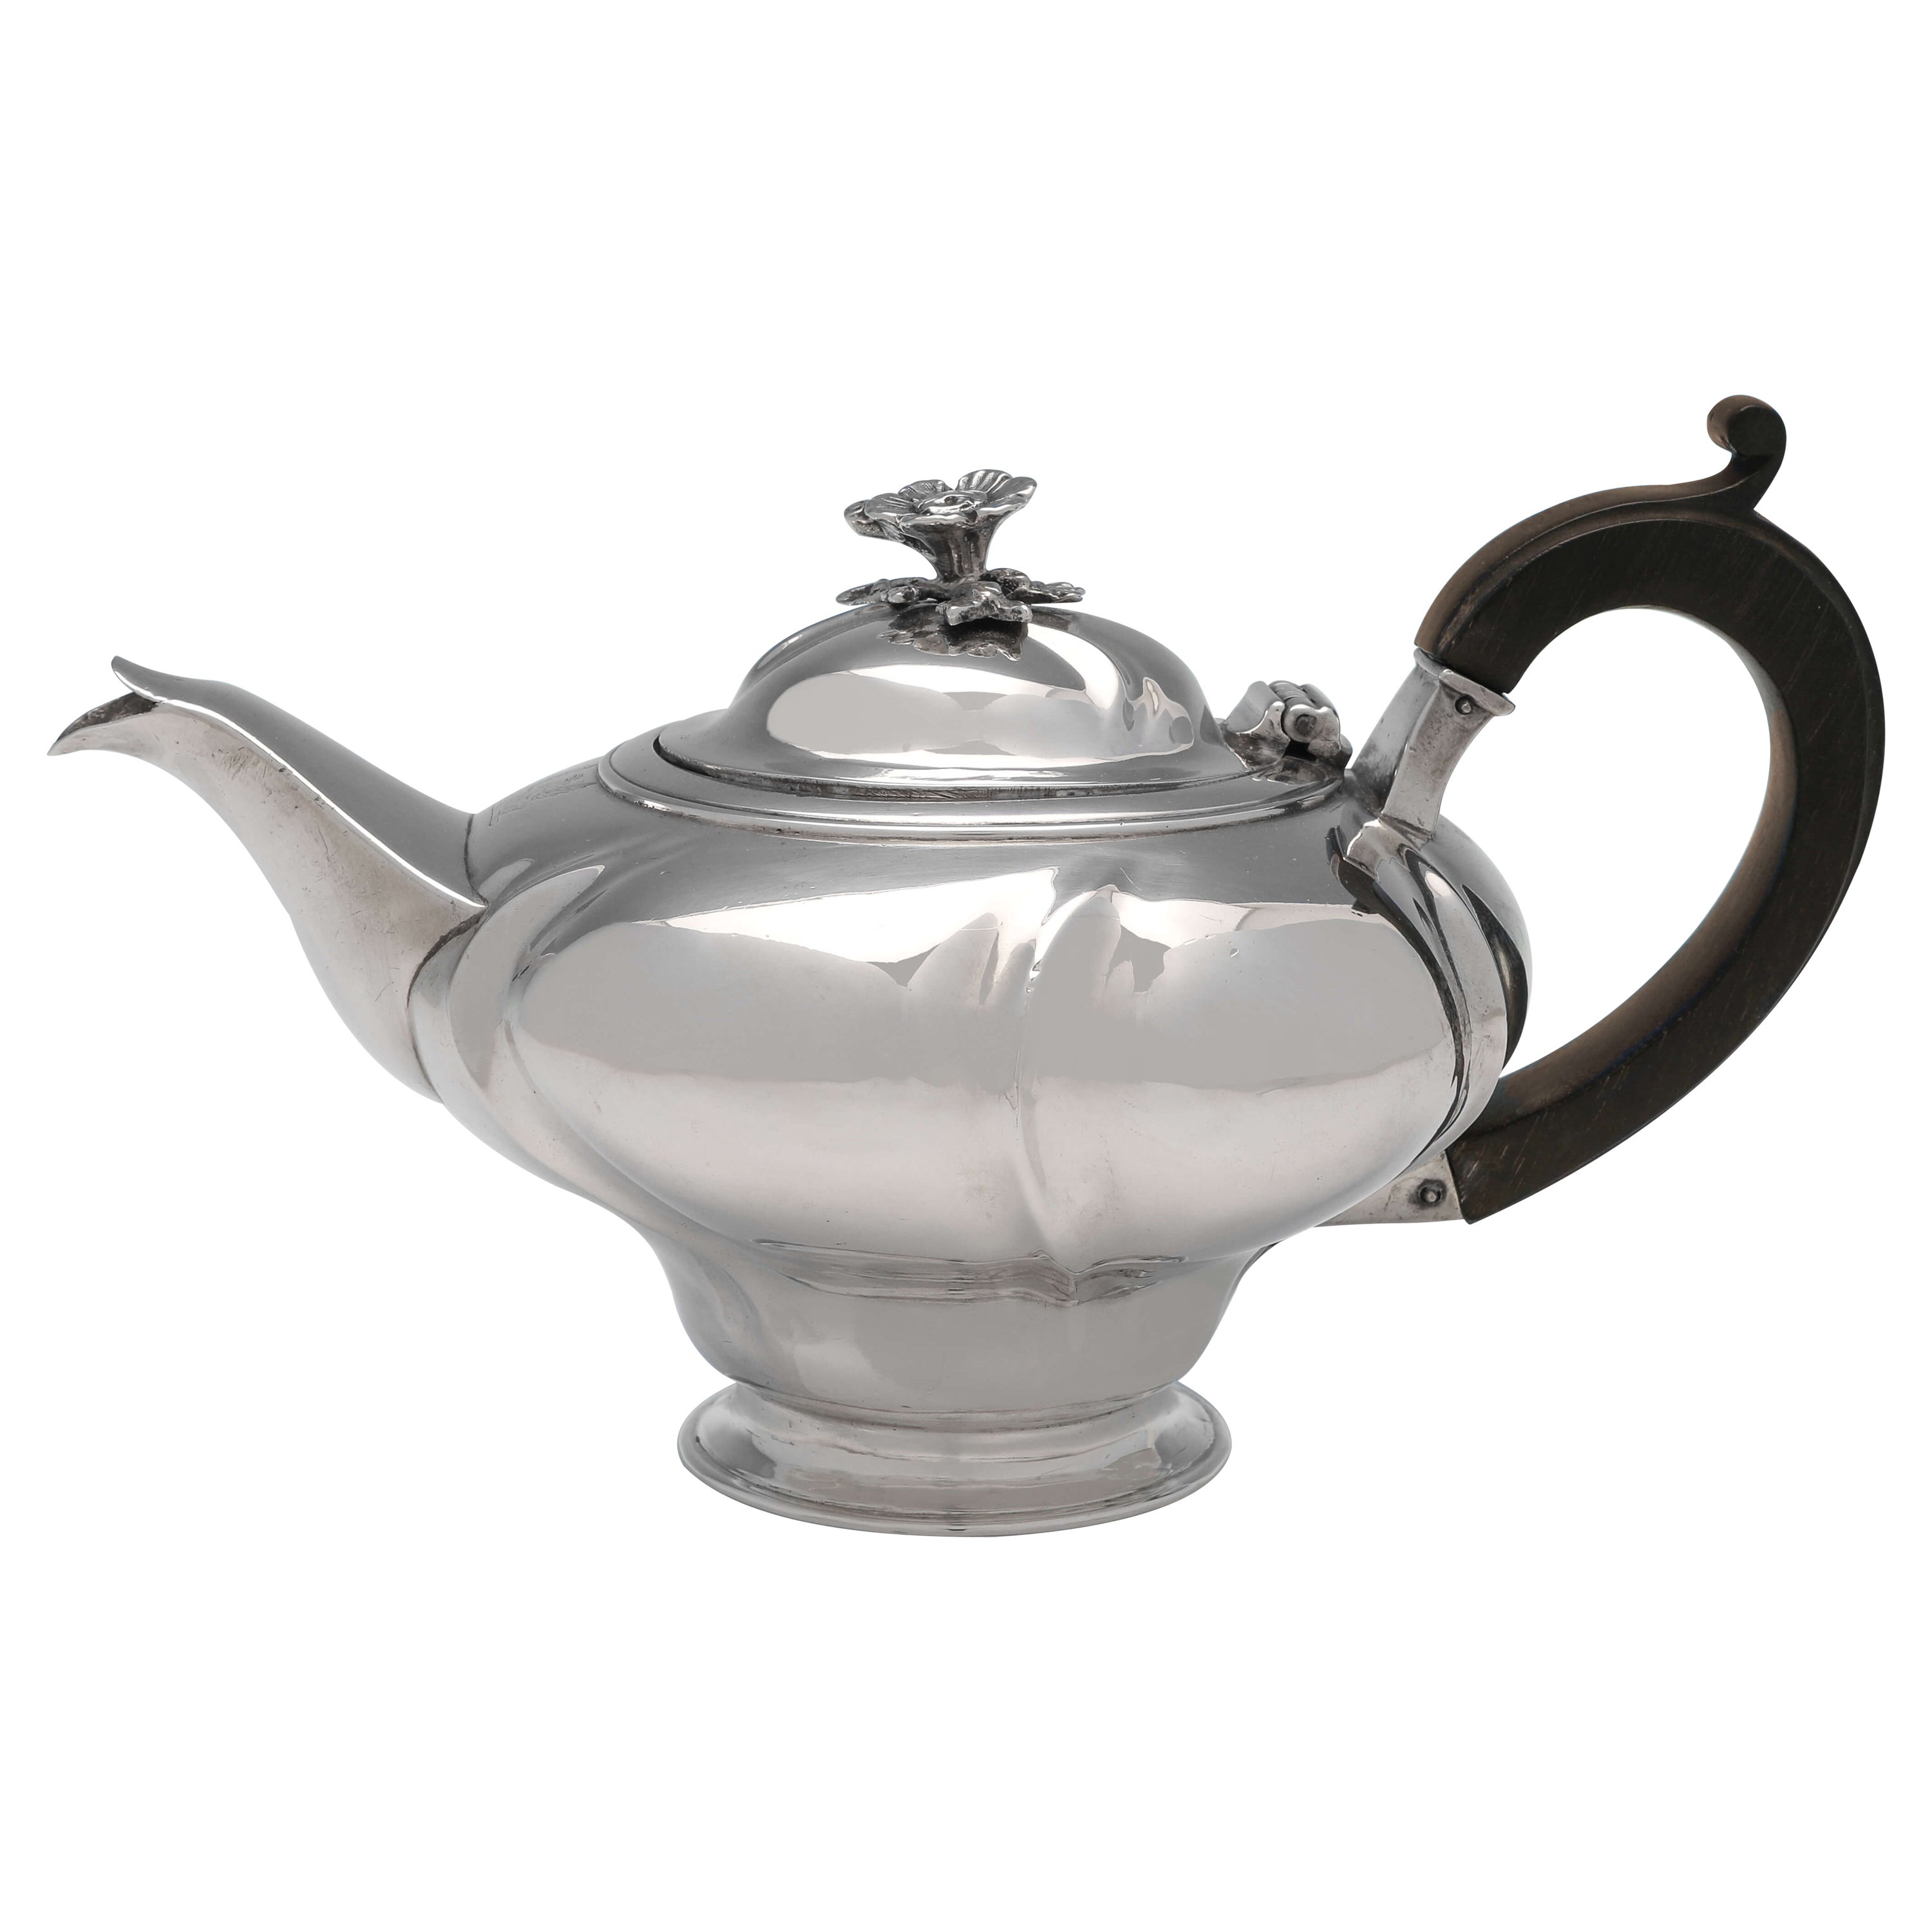 Stylish Antique Sterling Silver Teapot, Batchelor Size, London, 1824